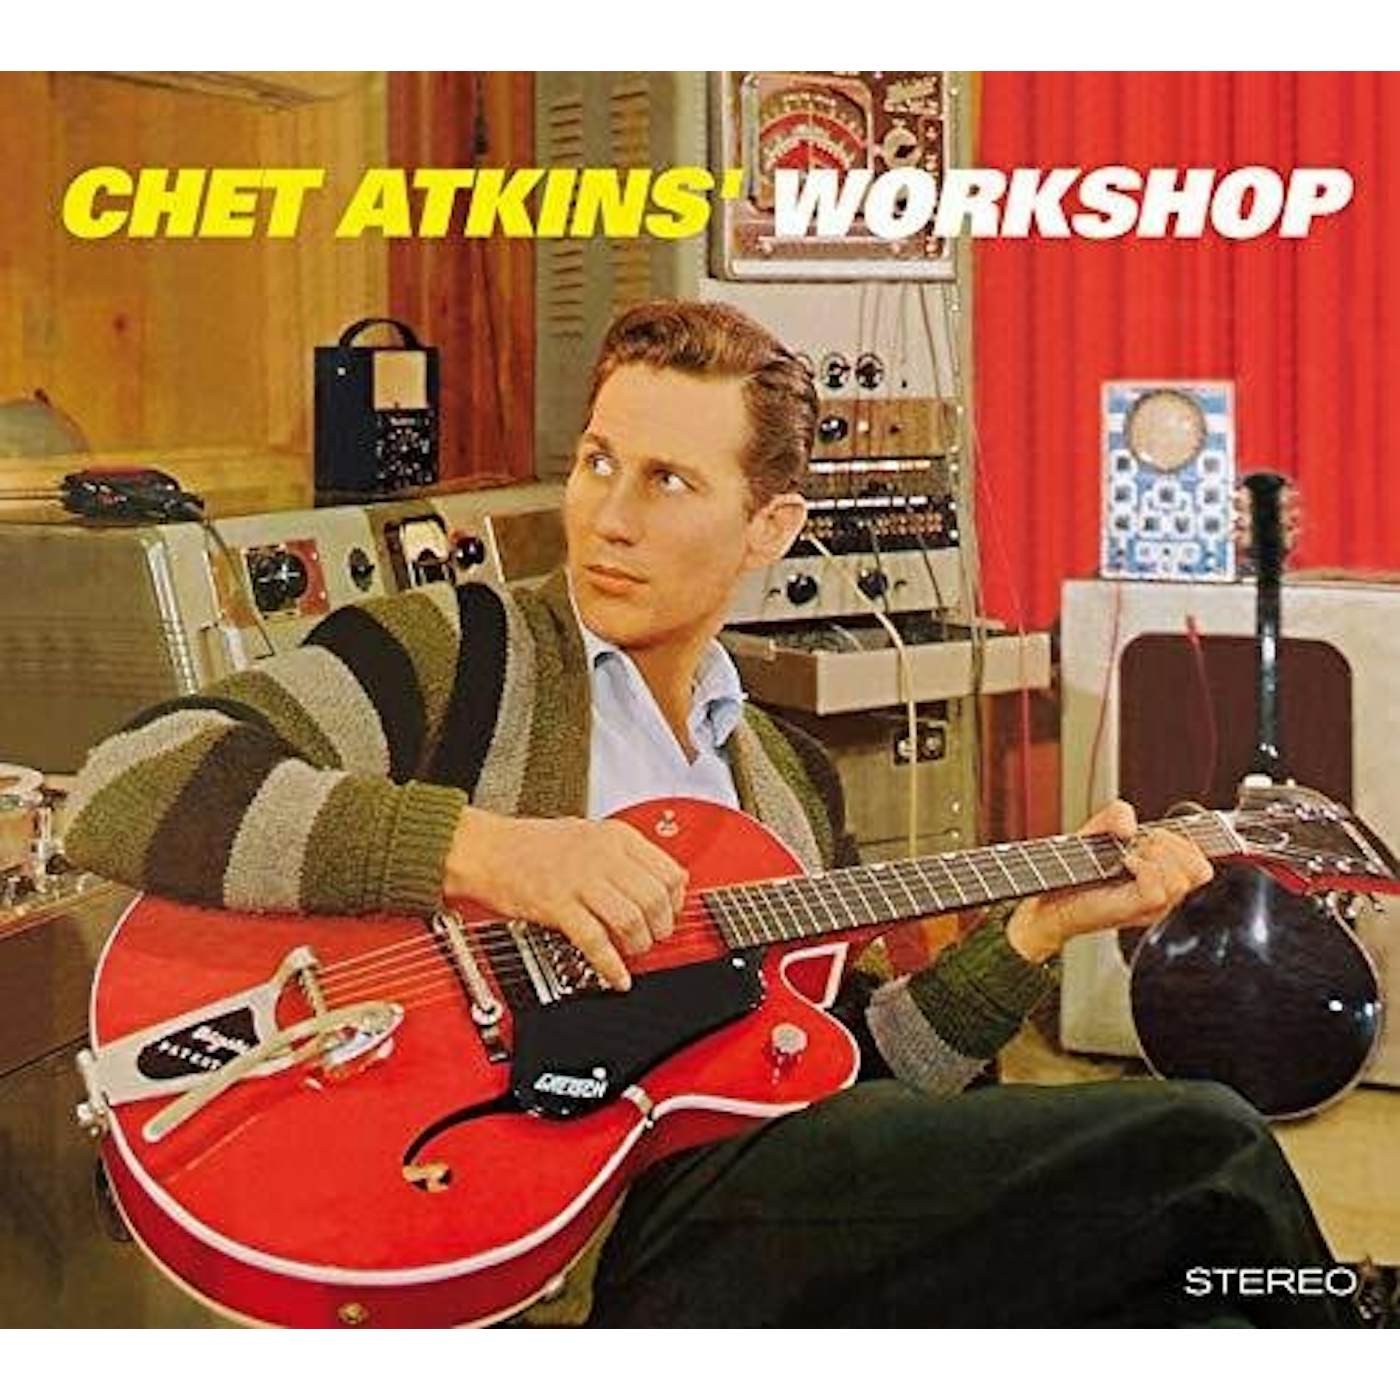 CHET ATKINS WORKSHOP / MOST POPULAR GUITAR CD